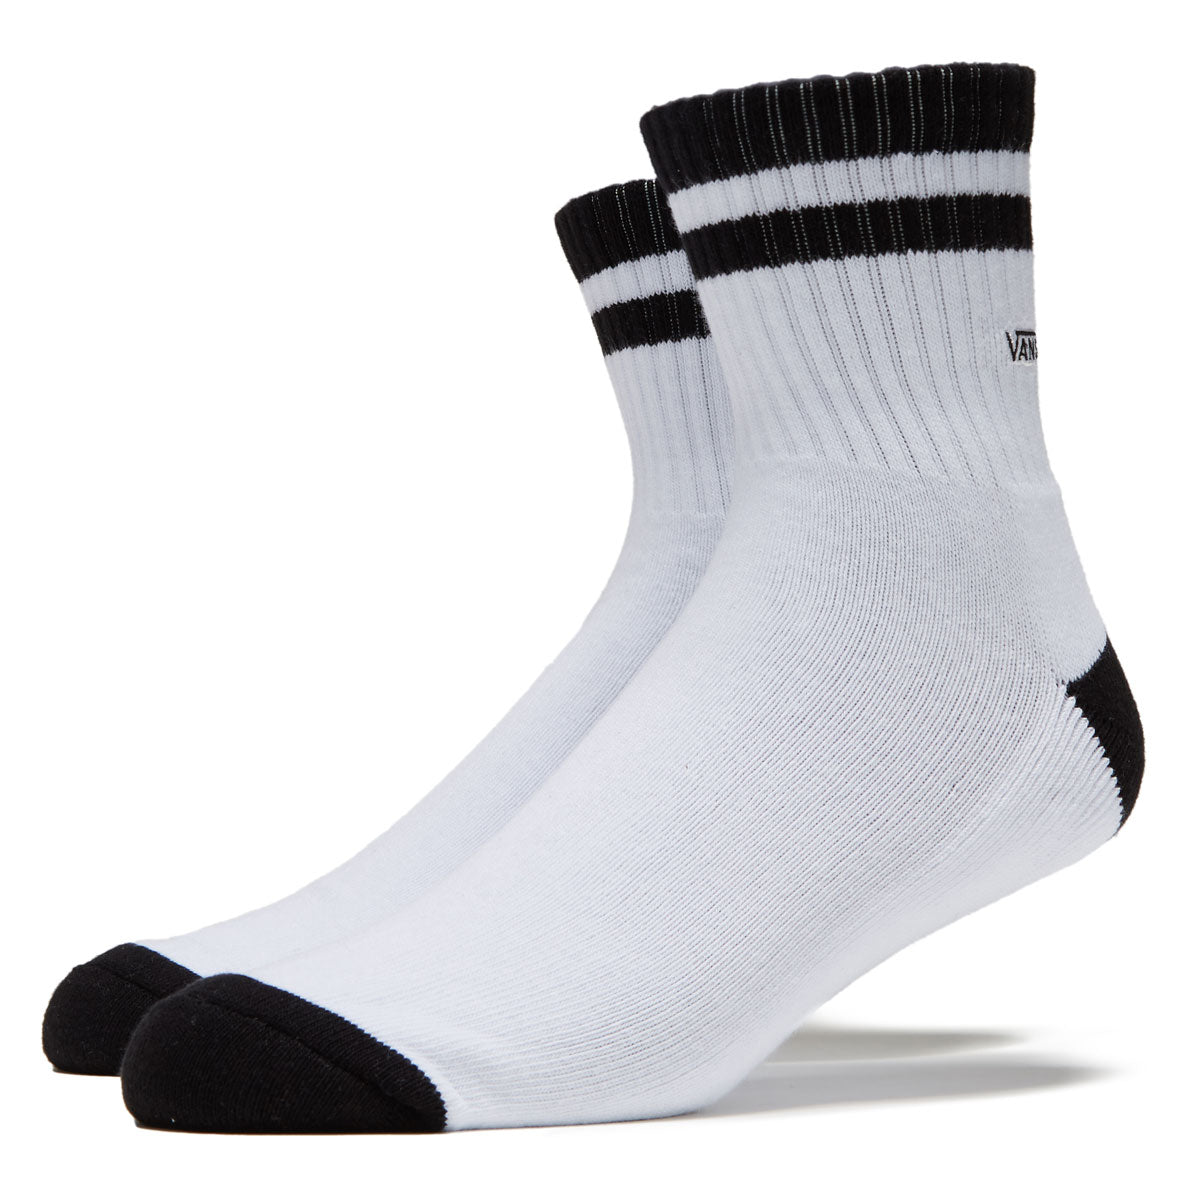 Vans Half Crew Socks - White/Black image 1